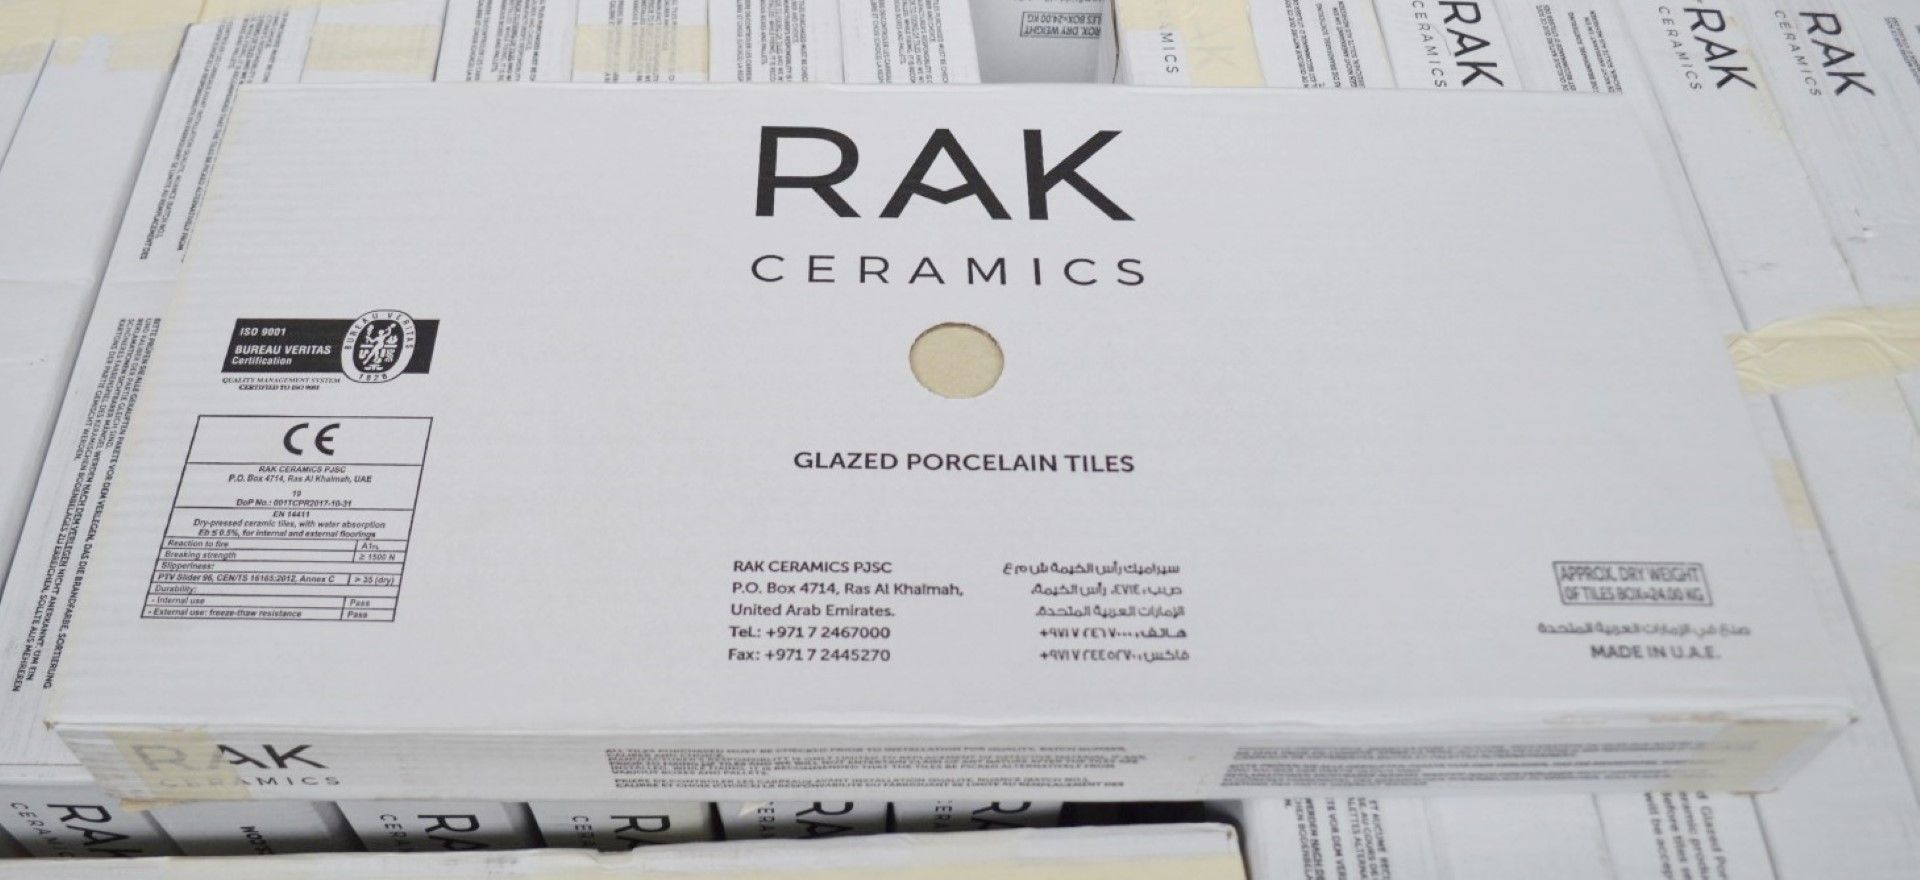 12 x Boxes of RAK Porcelain Floor or Wall Tiles - Concrete Rustic White Design - 30 x 60 cm Tiles - Image 5 of 8